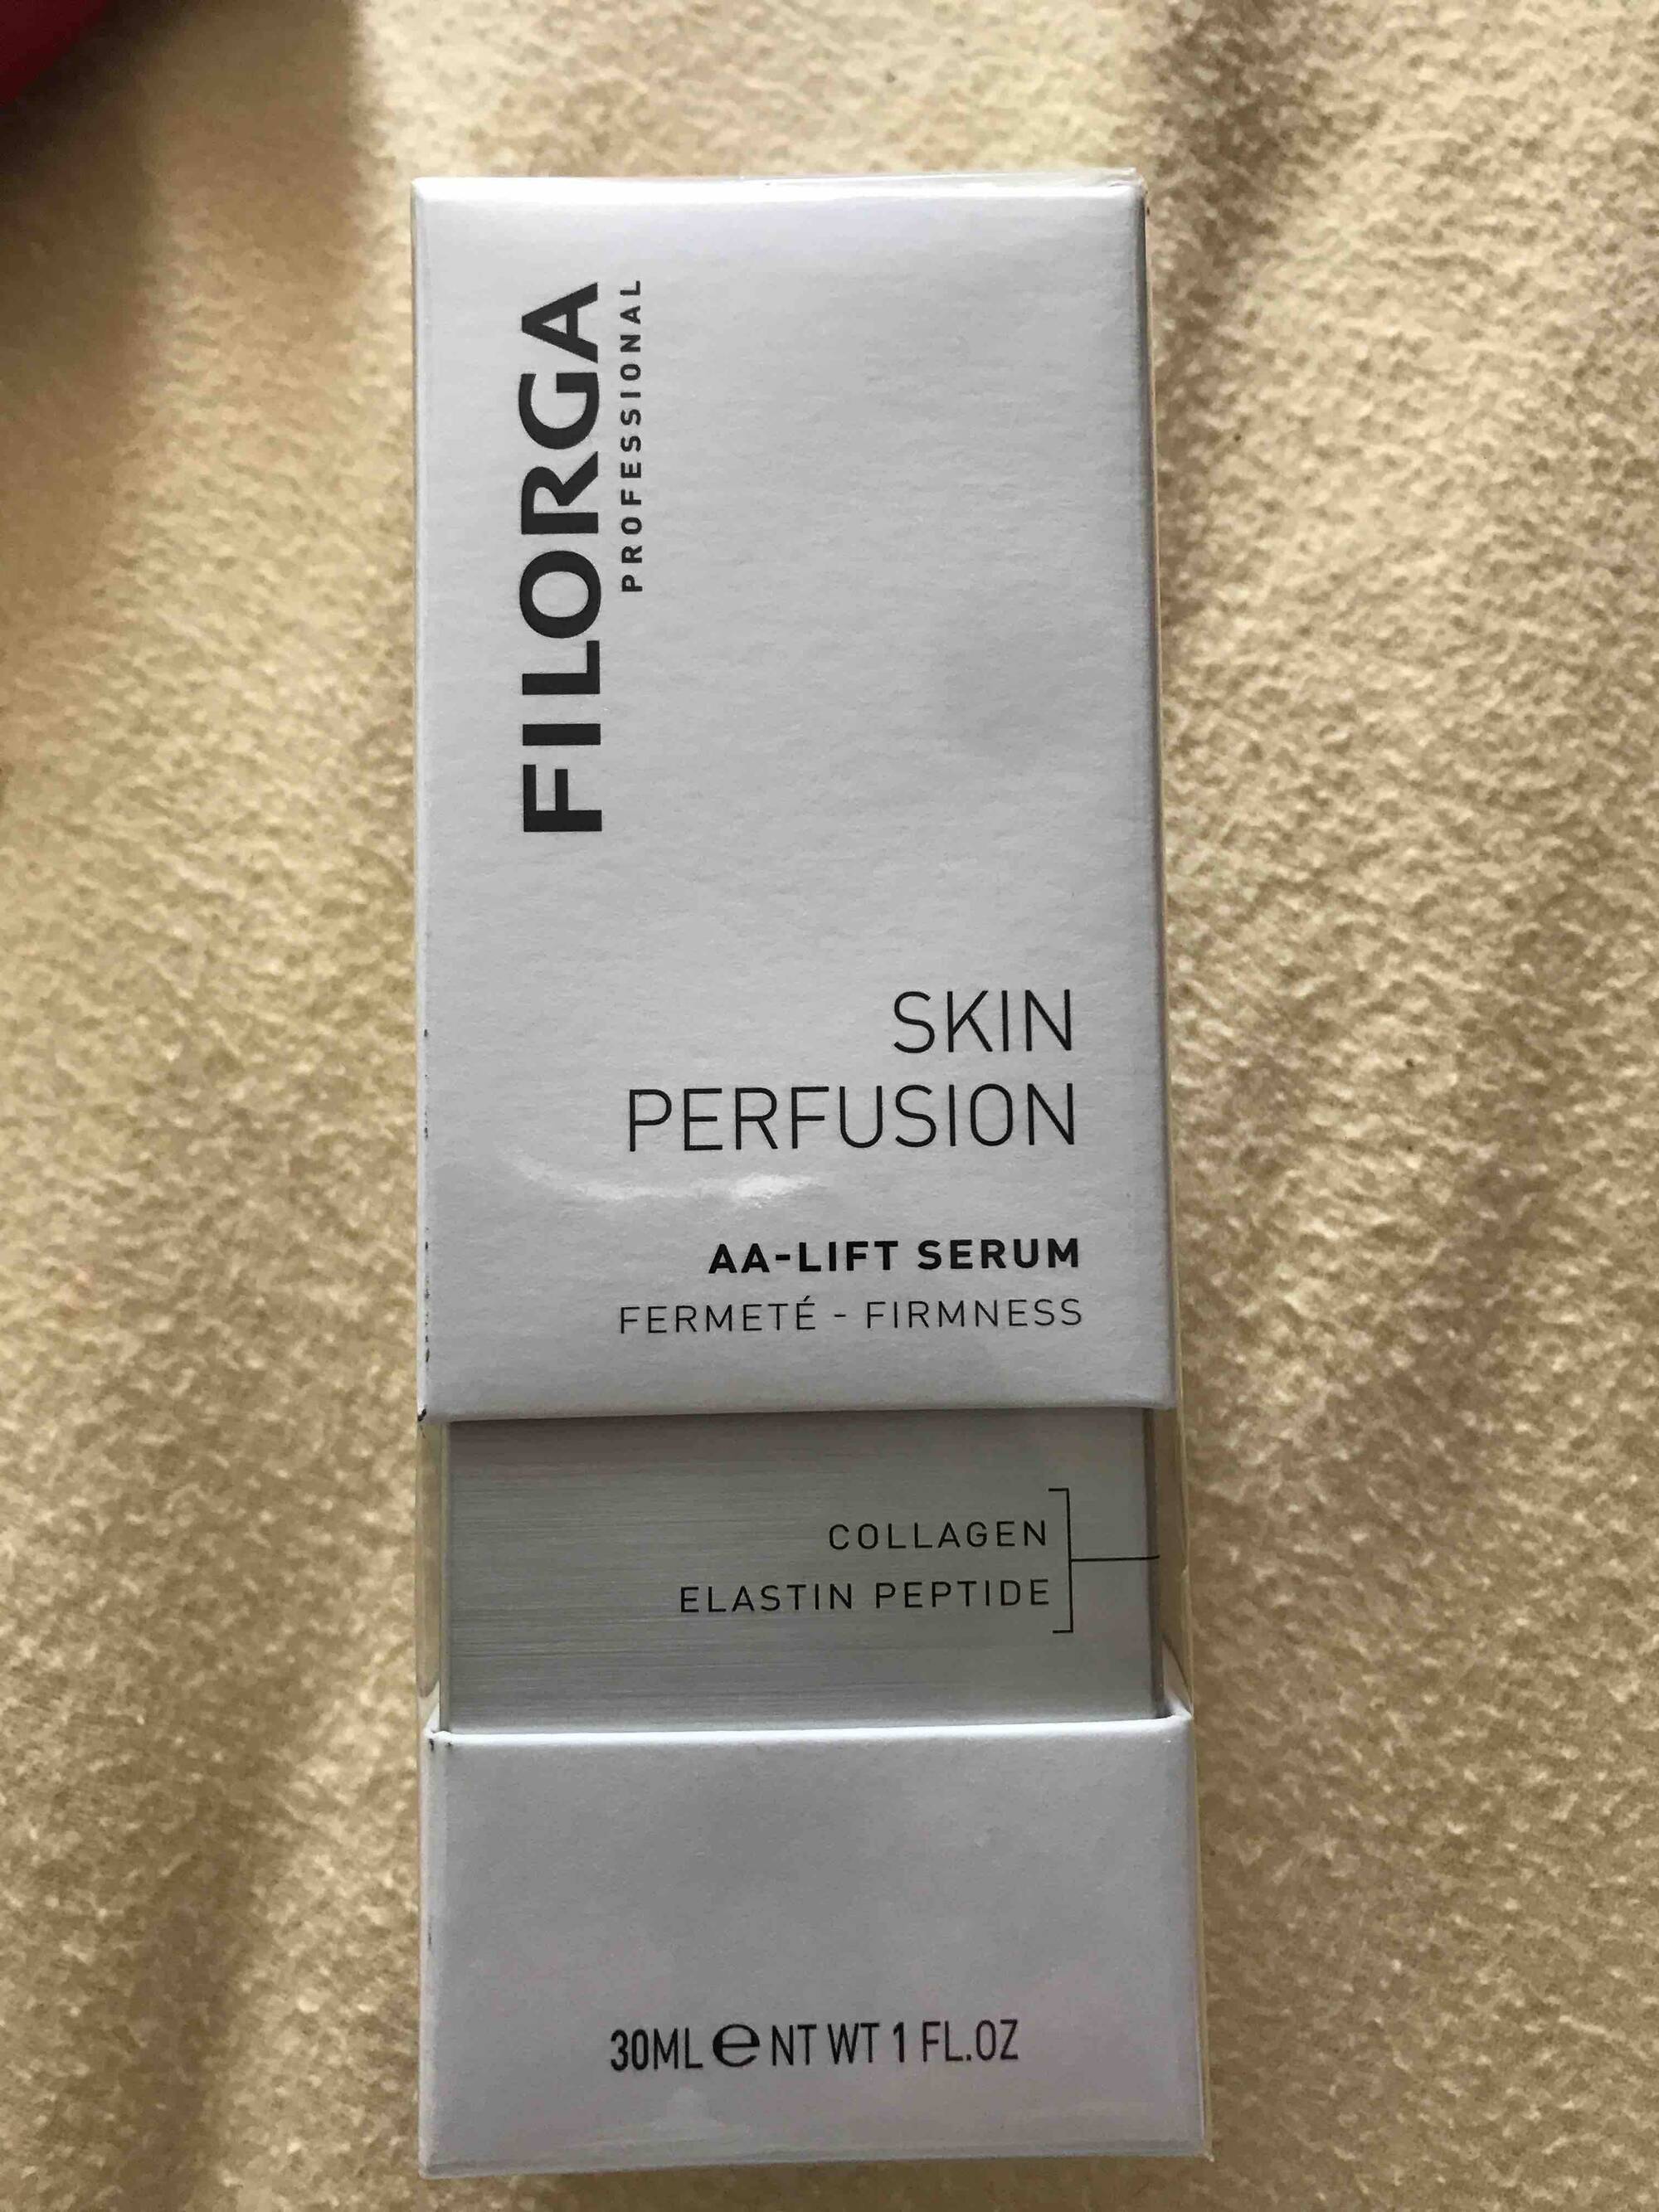 FILORGA PROFESSIONAL - Skin perfusion aa-lift serum